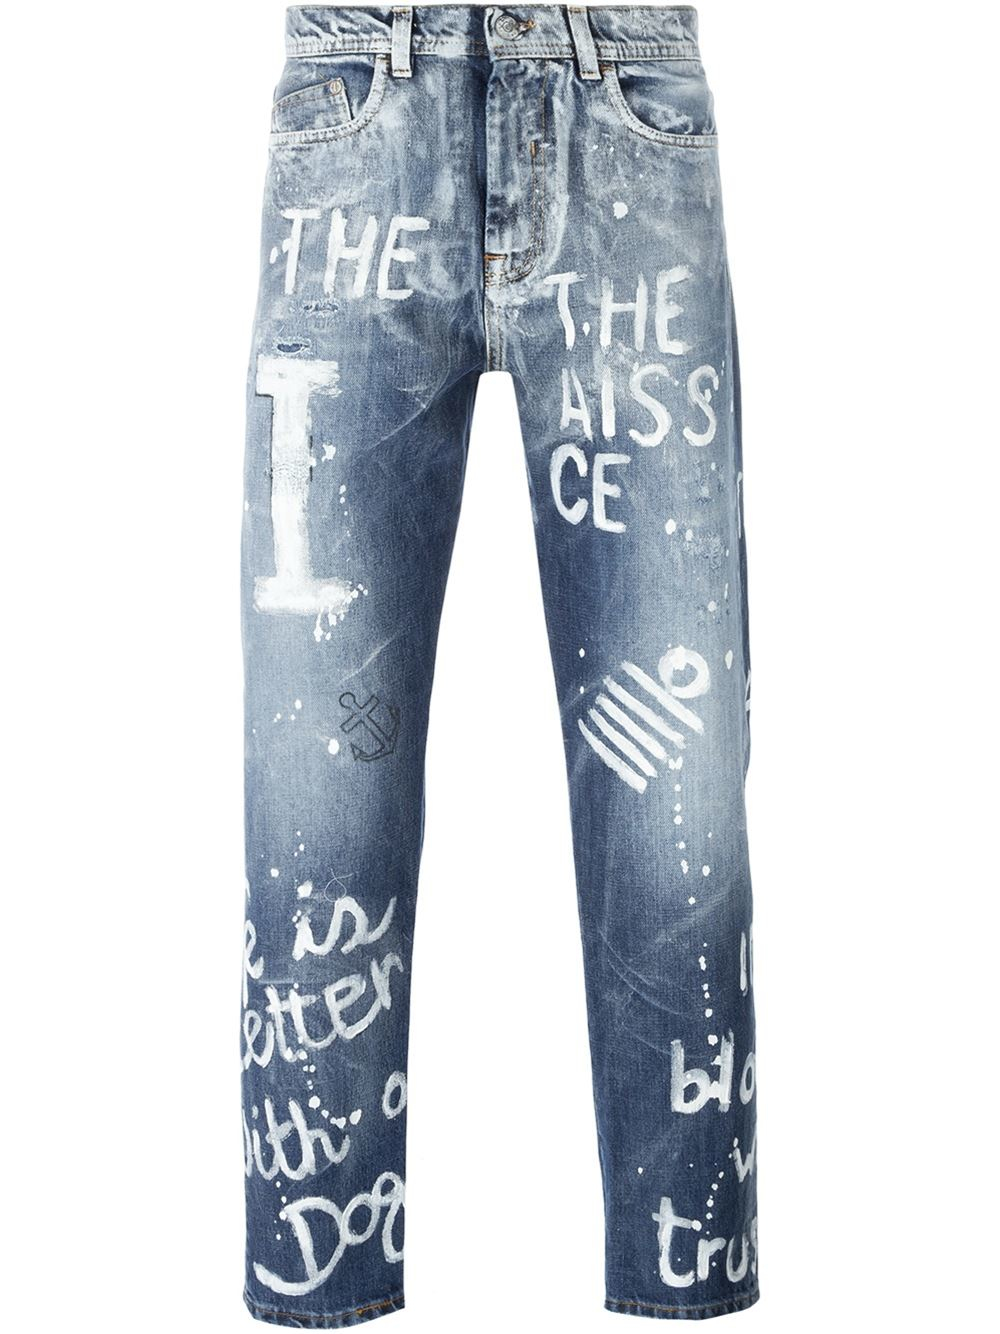 Iceberg Denim Quote Detail Jeans in Blue for Men - Lyst